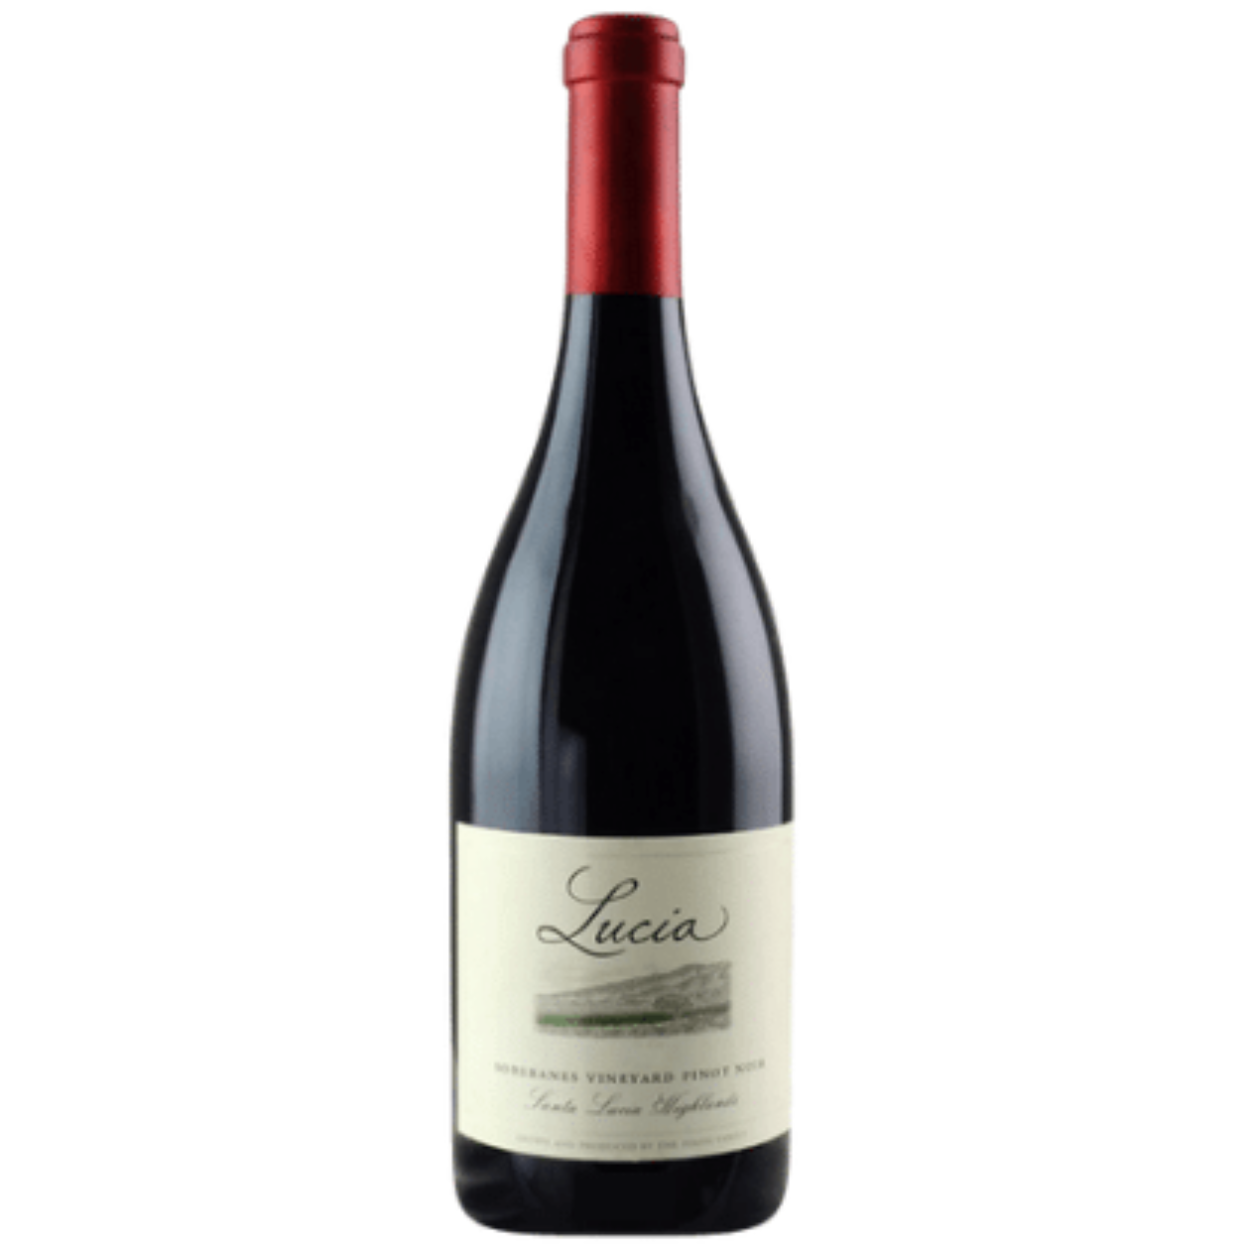 2019 Lucia Vineyards Soberanes Vineyard Pinot Noir Santa Lucia Highlands, USA